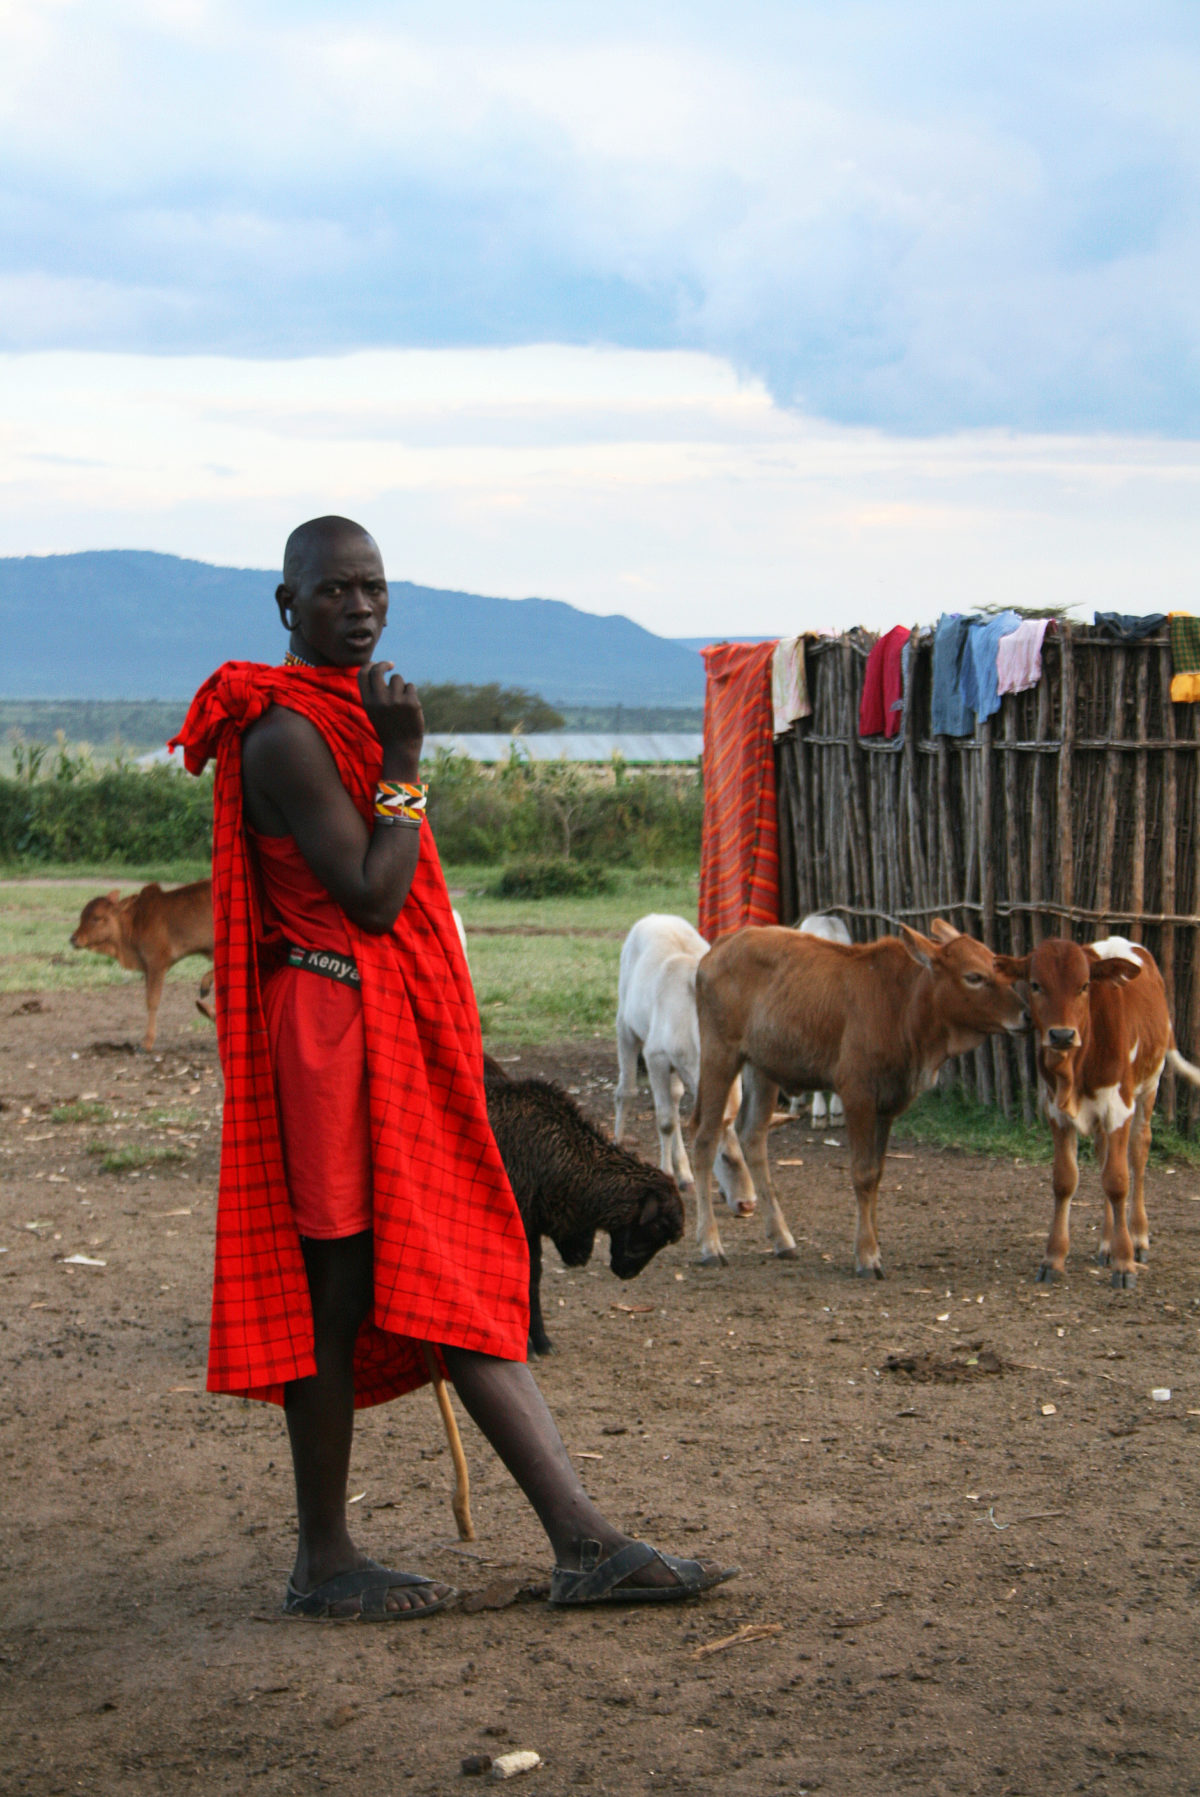 Youth of the “Maasai” ethnic minority representing Kenya